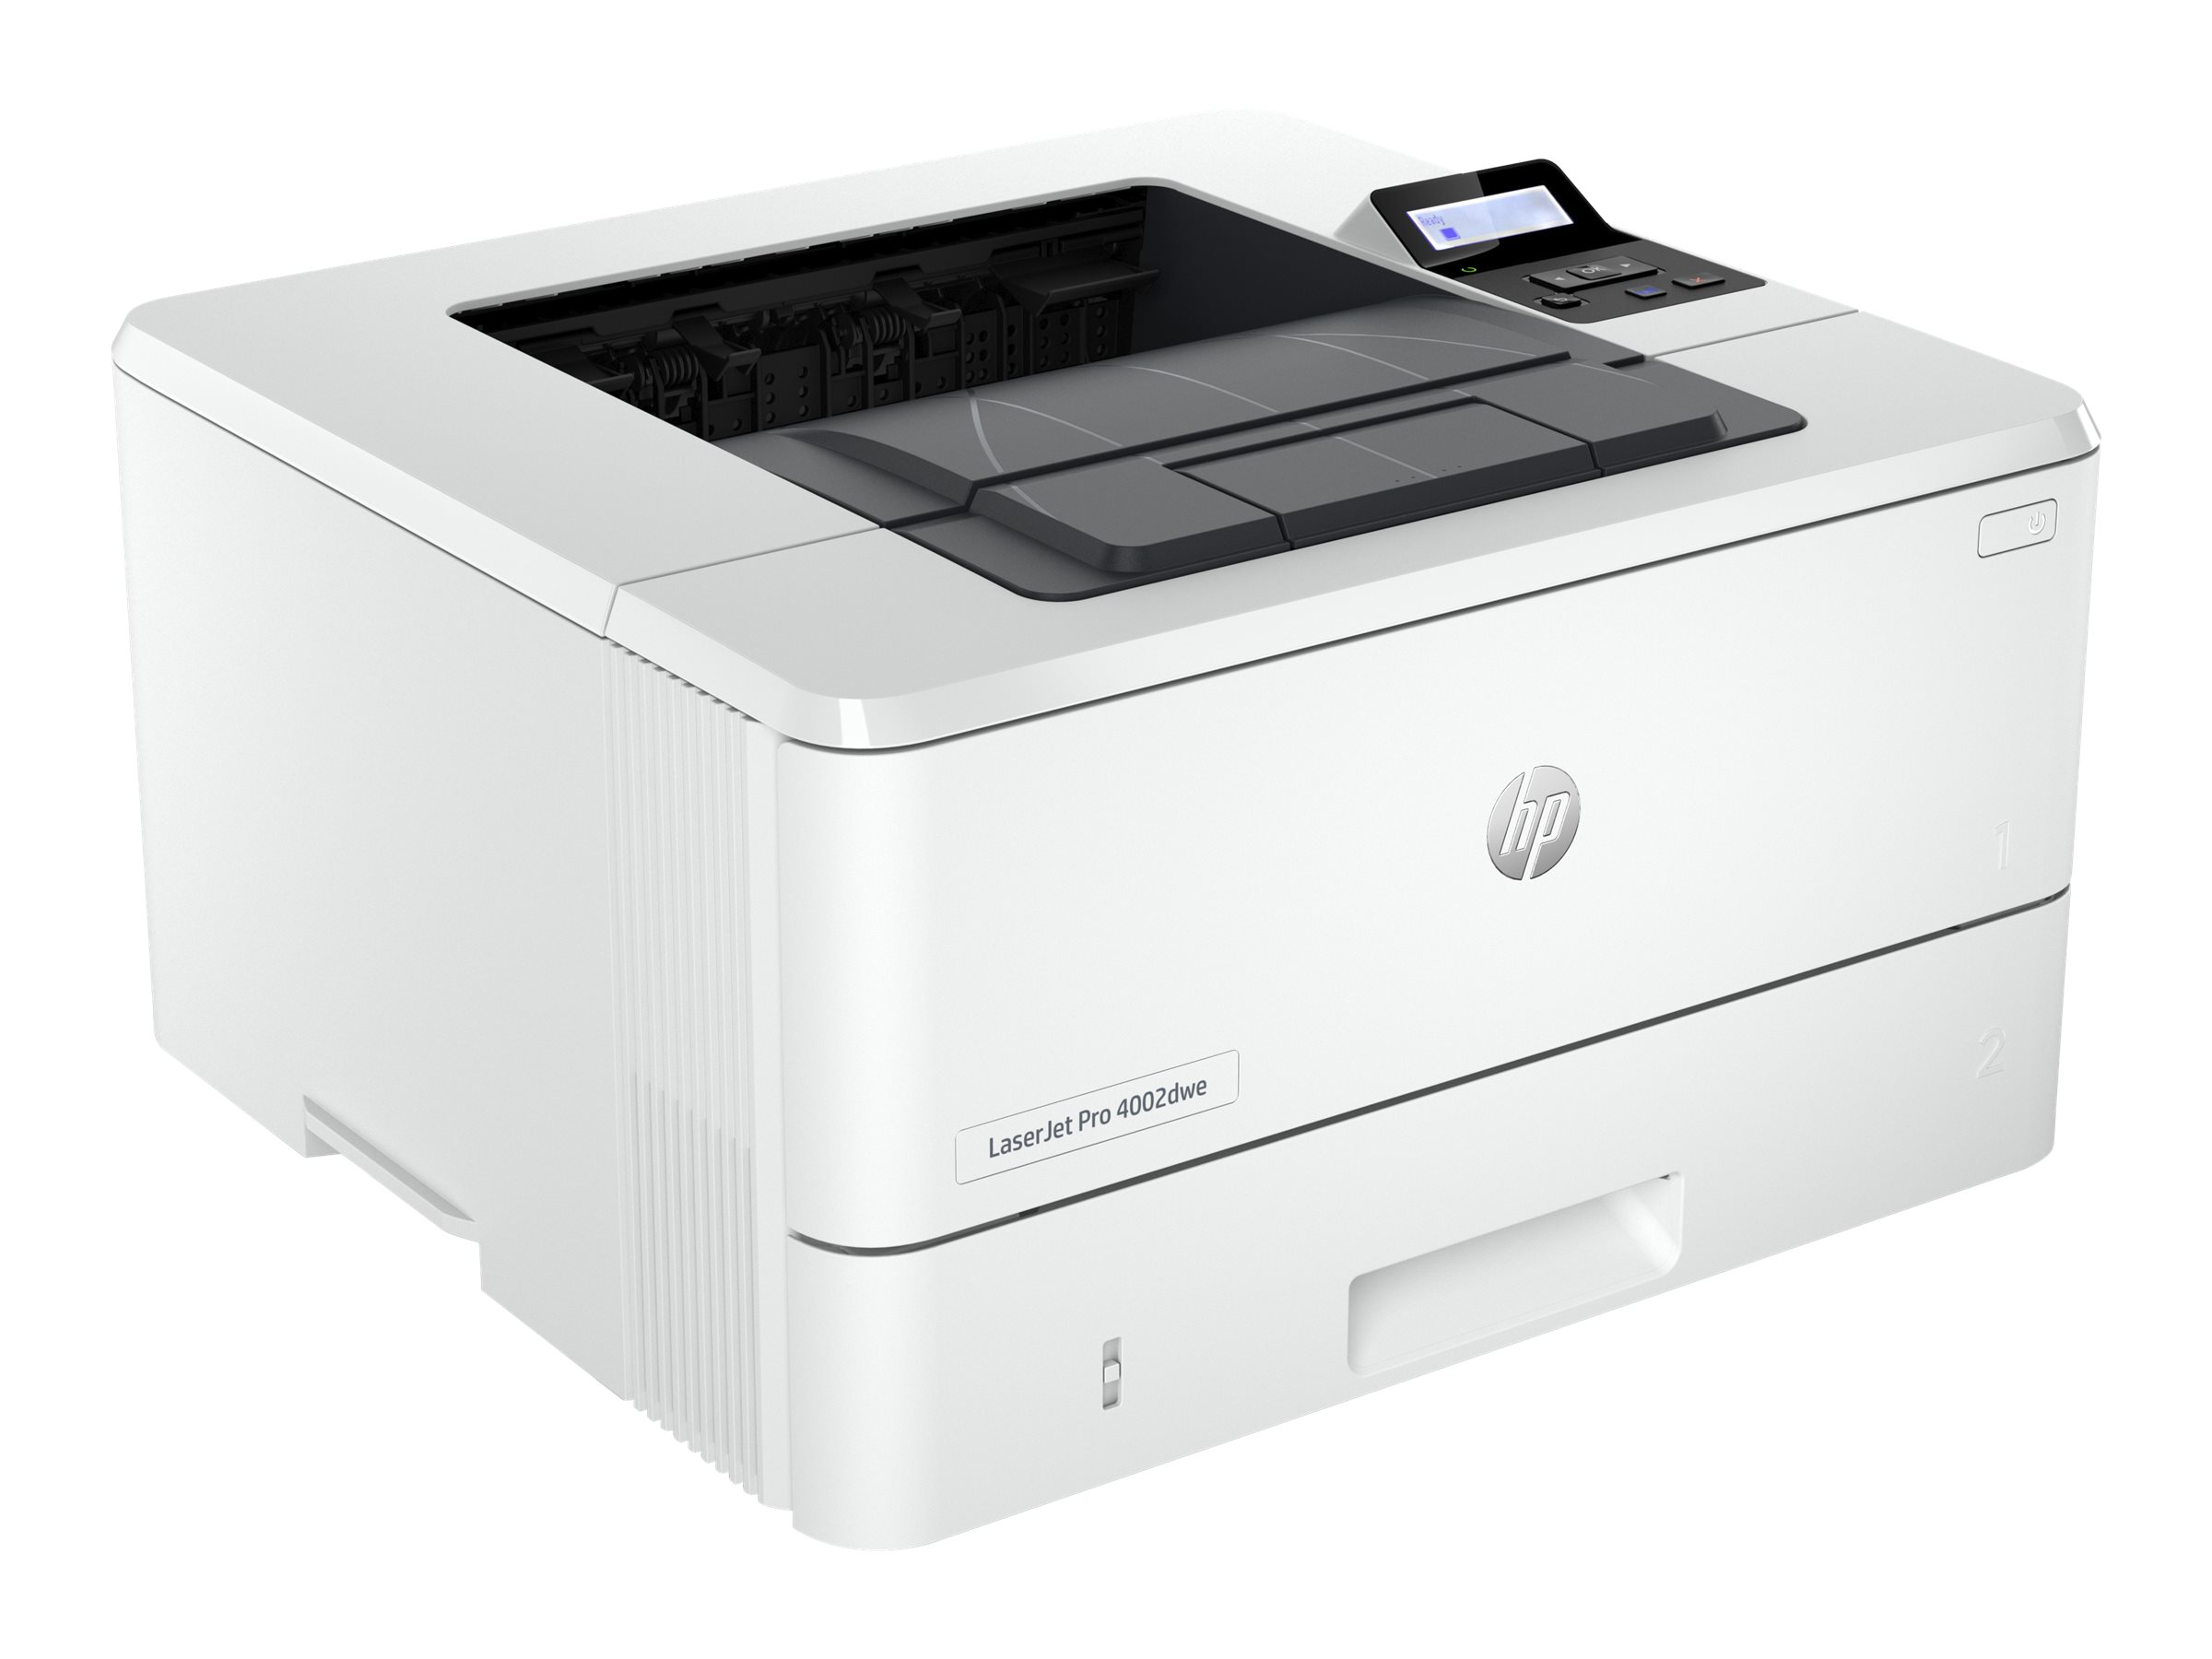 HP LaserJet Pro Stampante HP 4002dwe, Bianco e nero, Stampante per Piccole  e medie imprese, Stampa, wireless; HP+; idonea a HP Instant Ink; stampa da